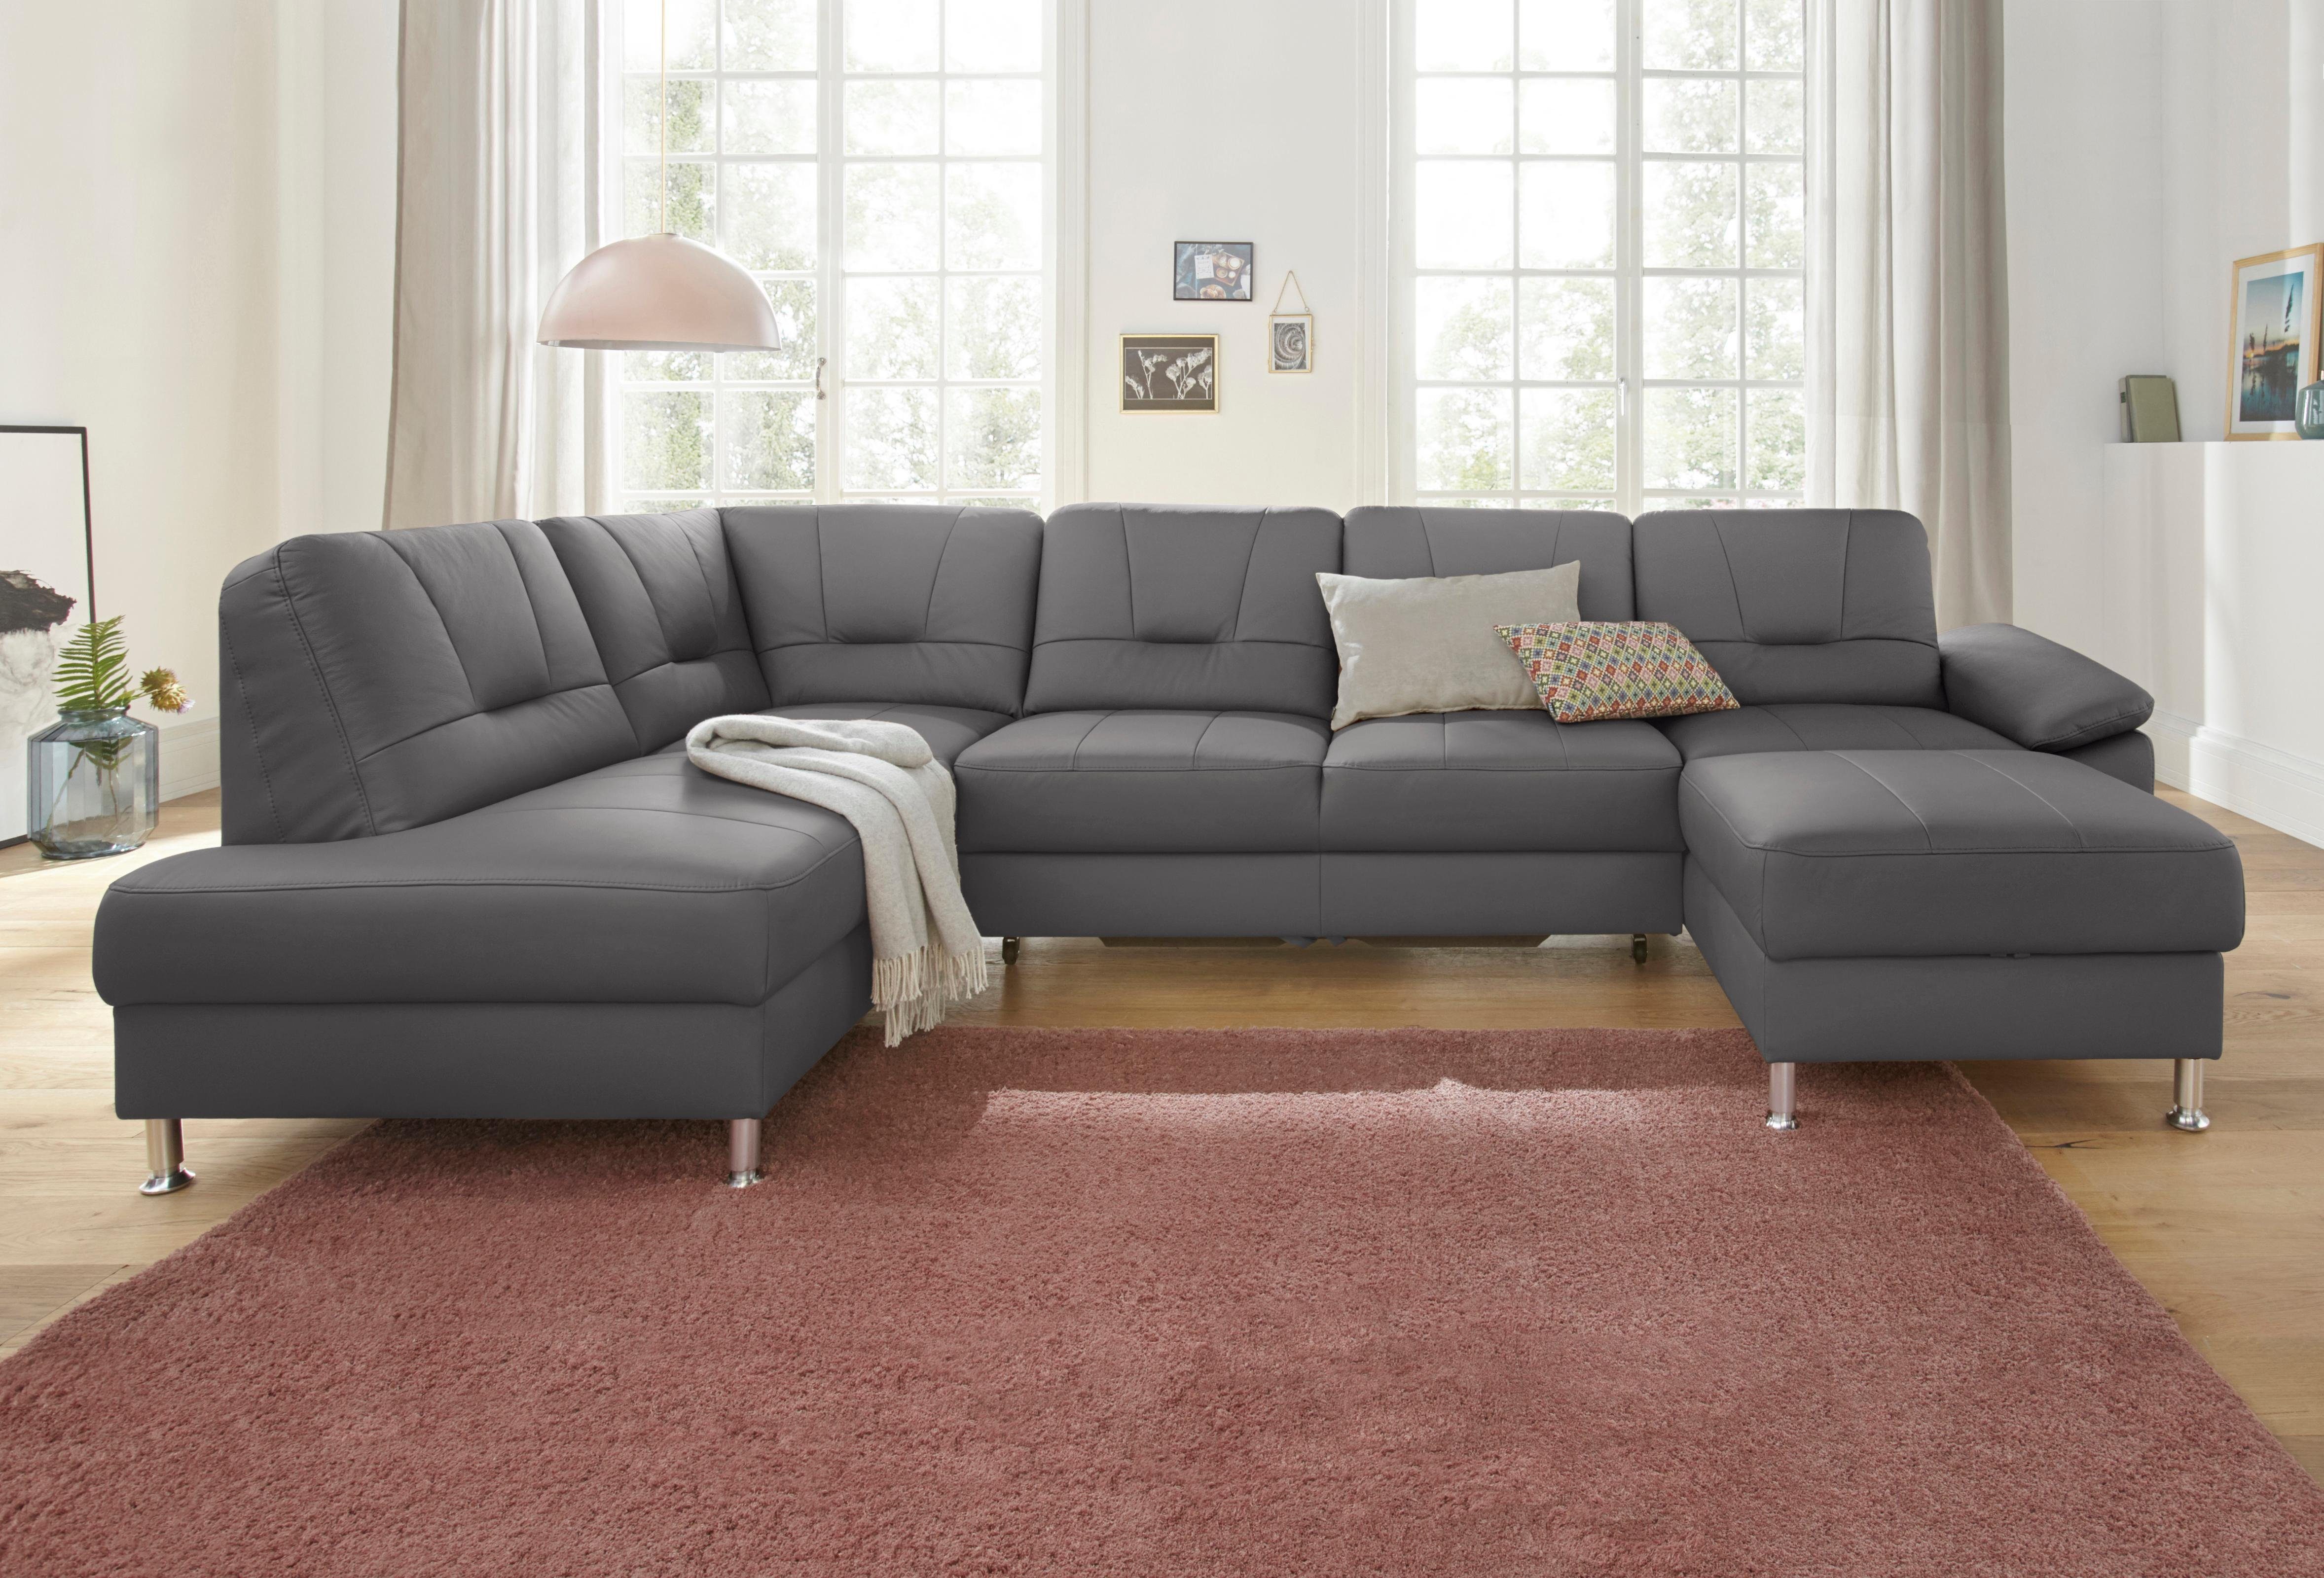 exxpo - sofa fashion Wohnlandschaft Castello, U-Form, wahlweise mit Bettfunktion